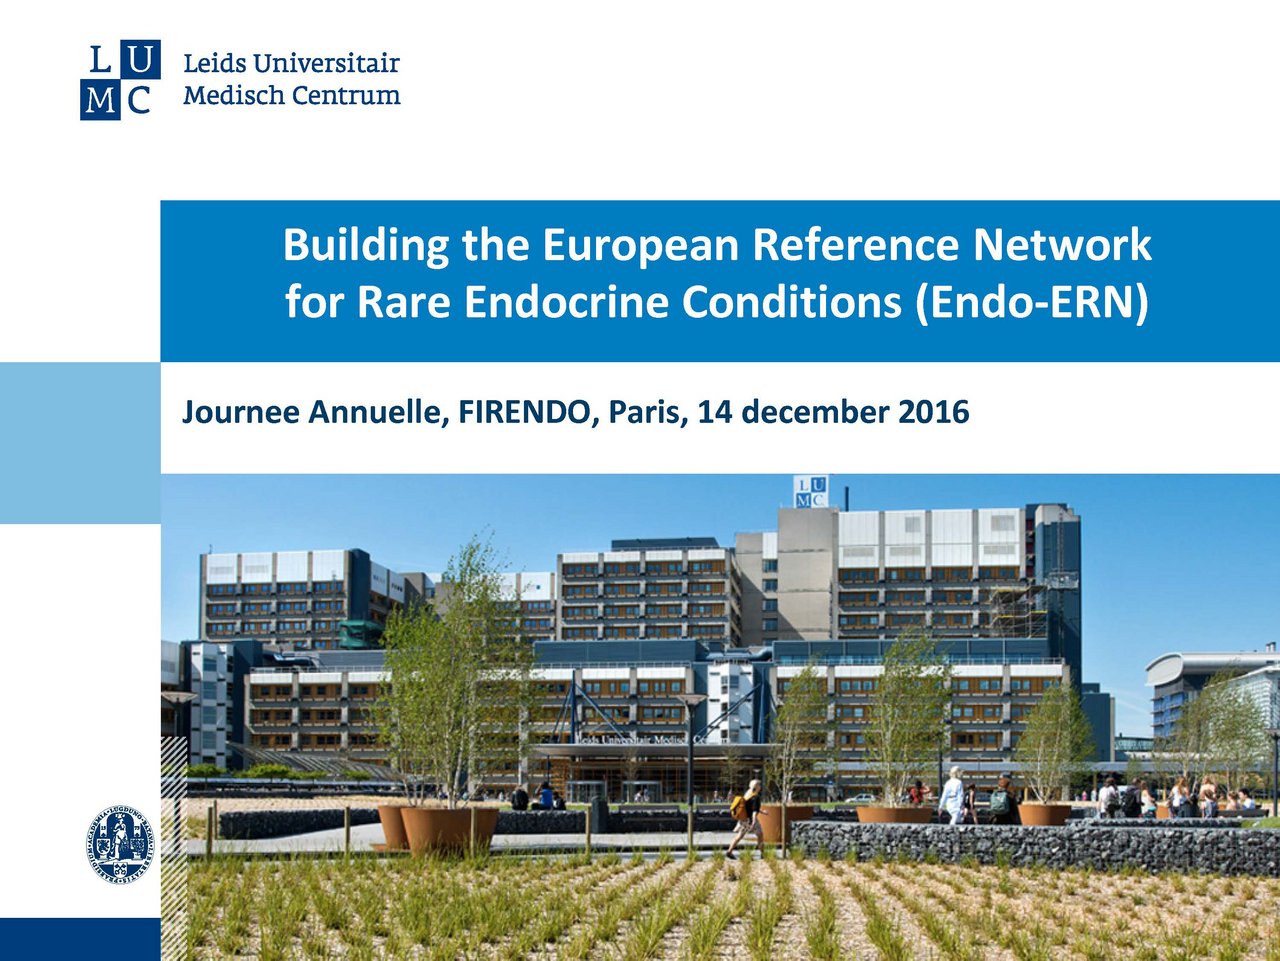 Journée Annuelle FIRENDO 2016 Alberto Pereira EndoERN European Reference Network Endocrine Rare Diseases Conditions